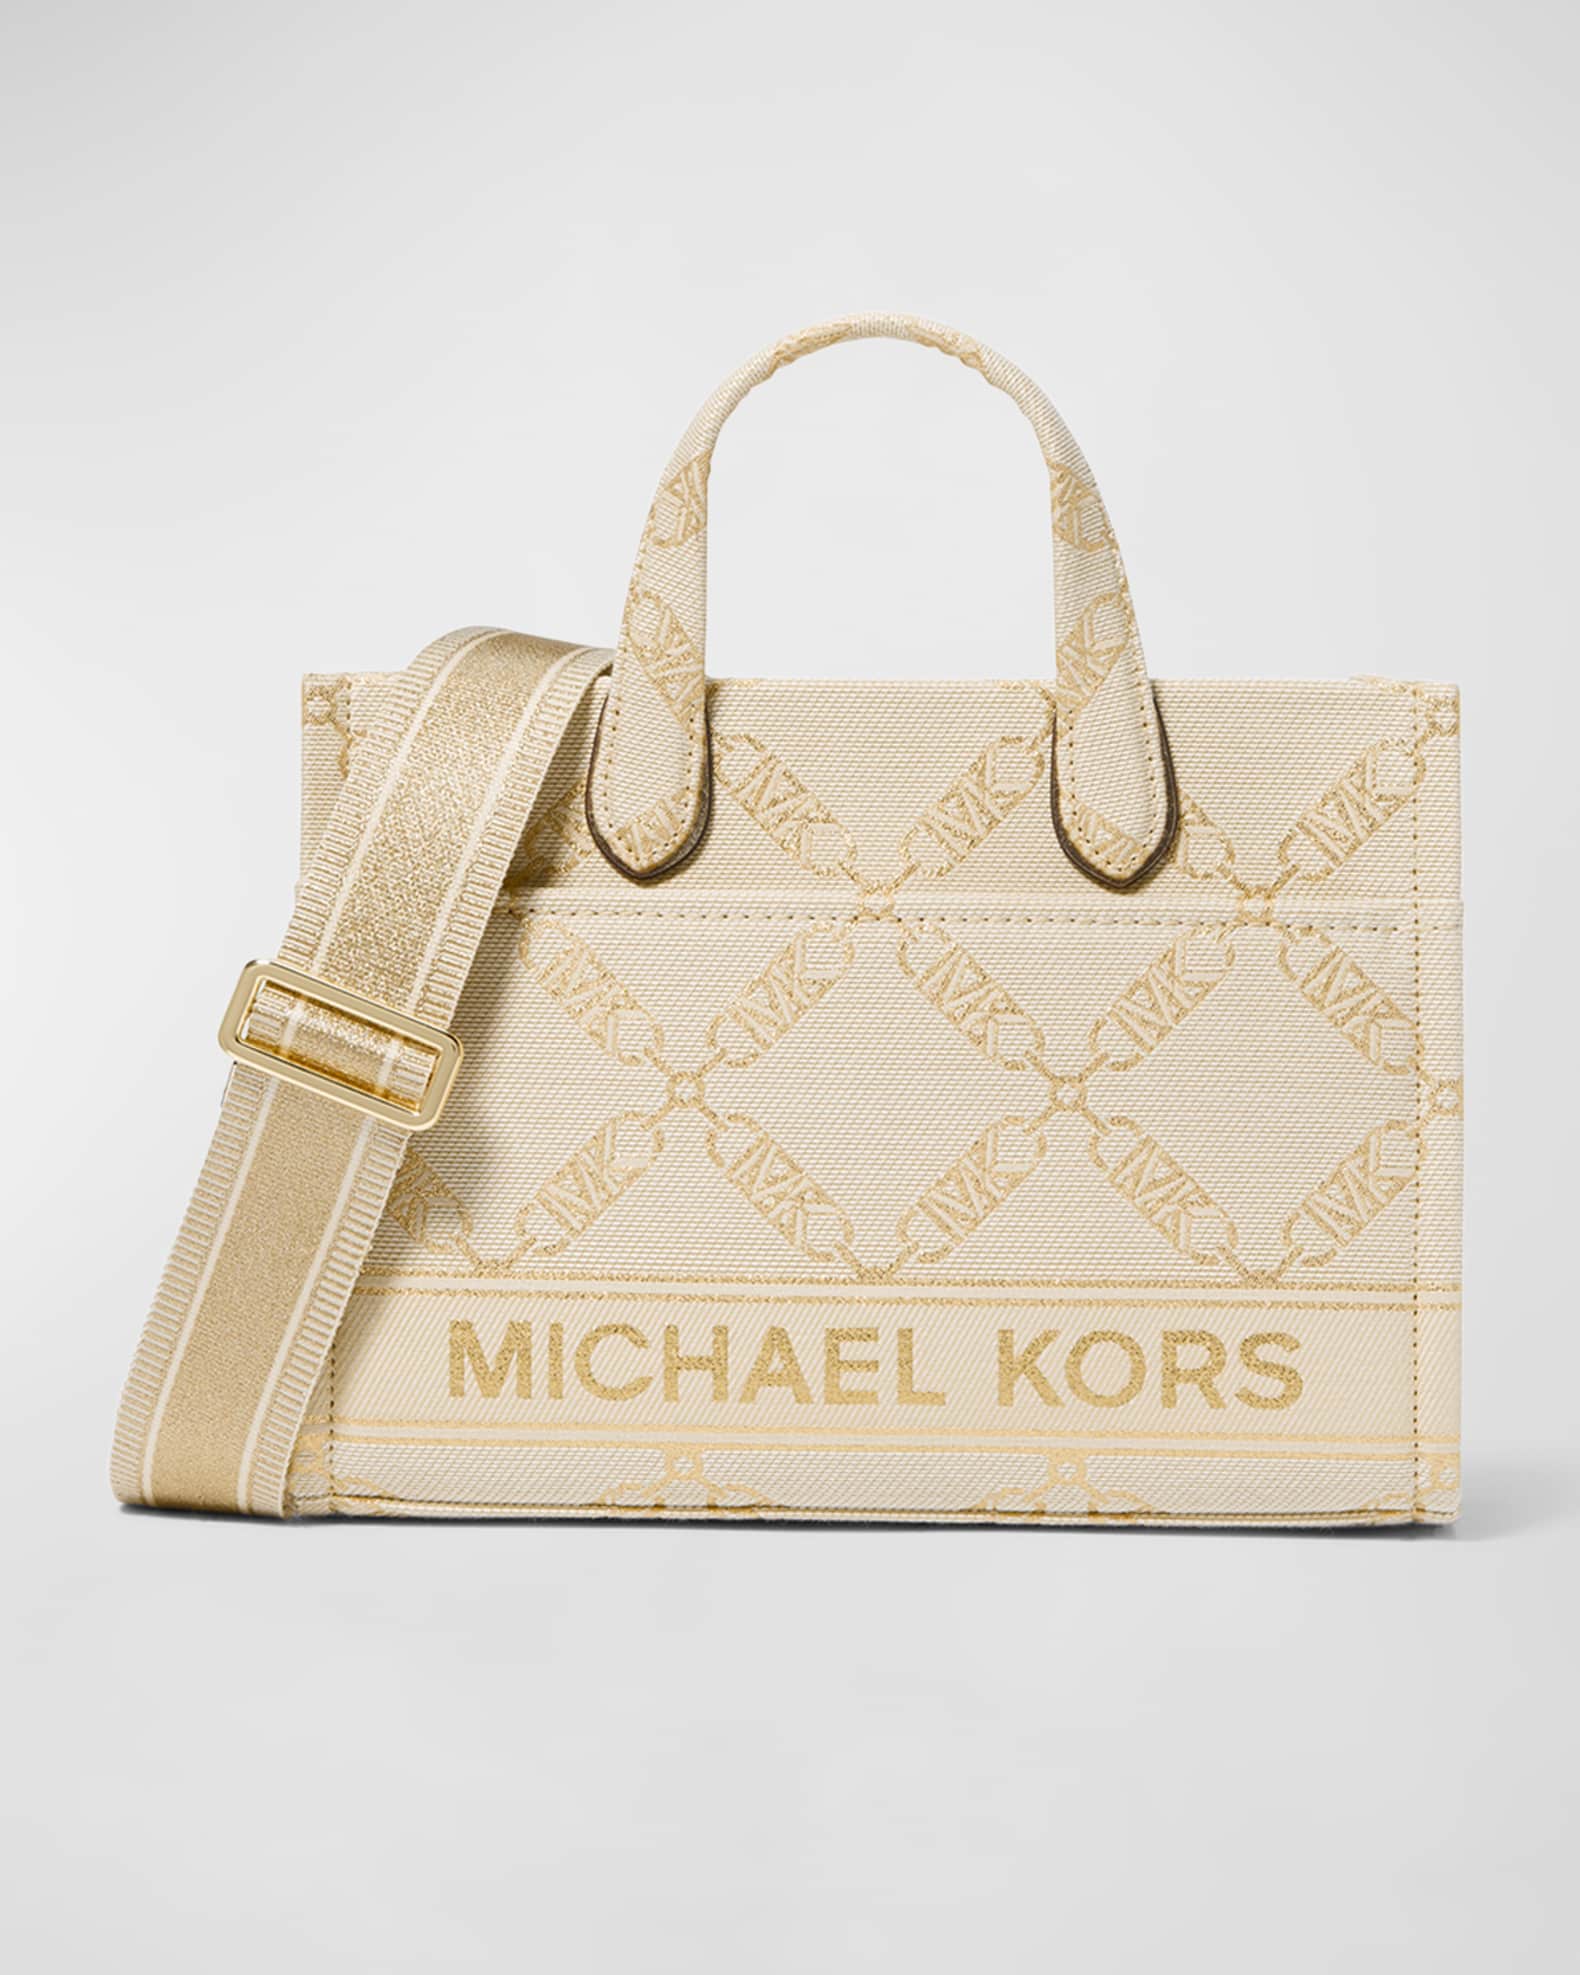 Michael Kors Bags | Michael Kors Kenly Large Tote | Color: Blue/Brown | Size: Os | Link4u's Closet